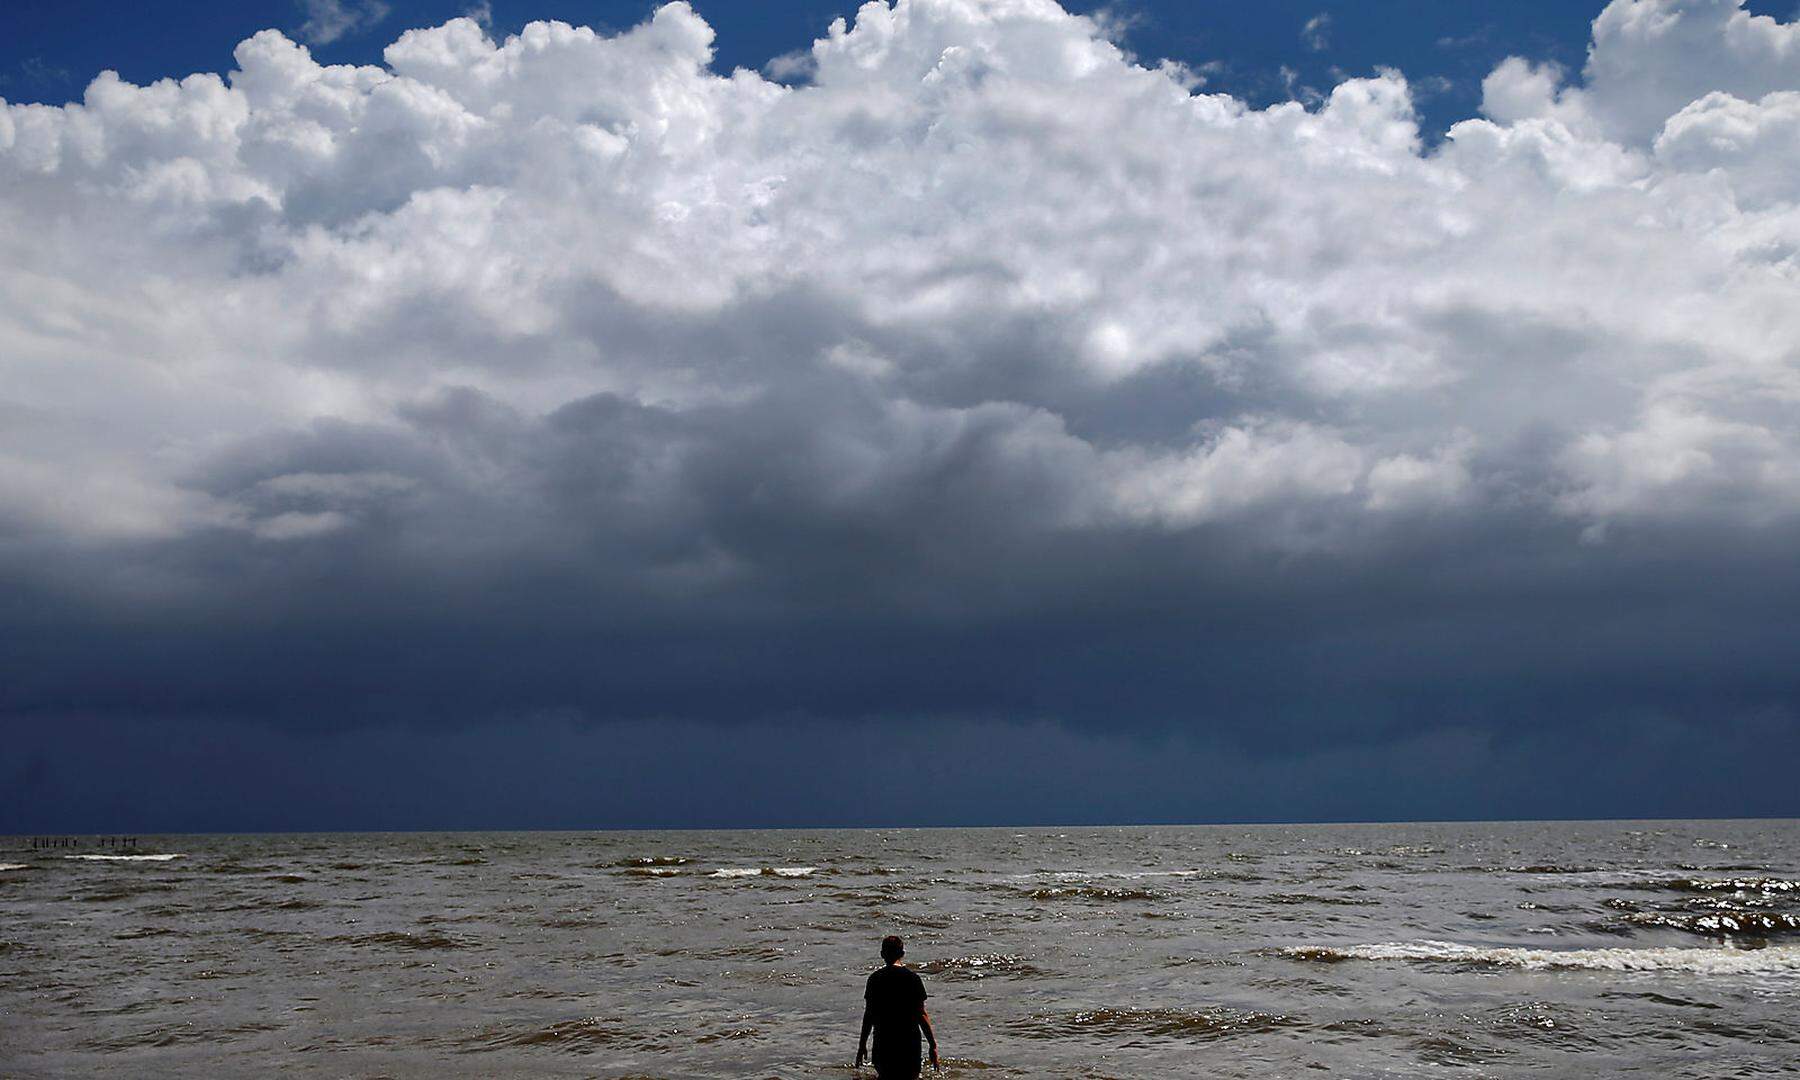 15-year-old Jordan Carambat wades in the ocean as Tropical Storm Gordon approaches Waveland